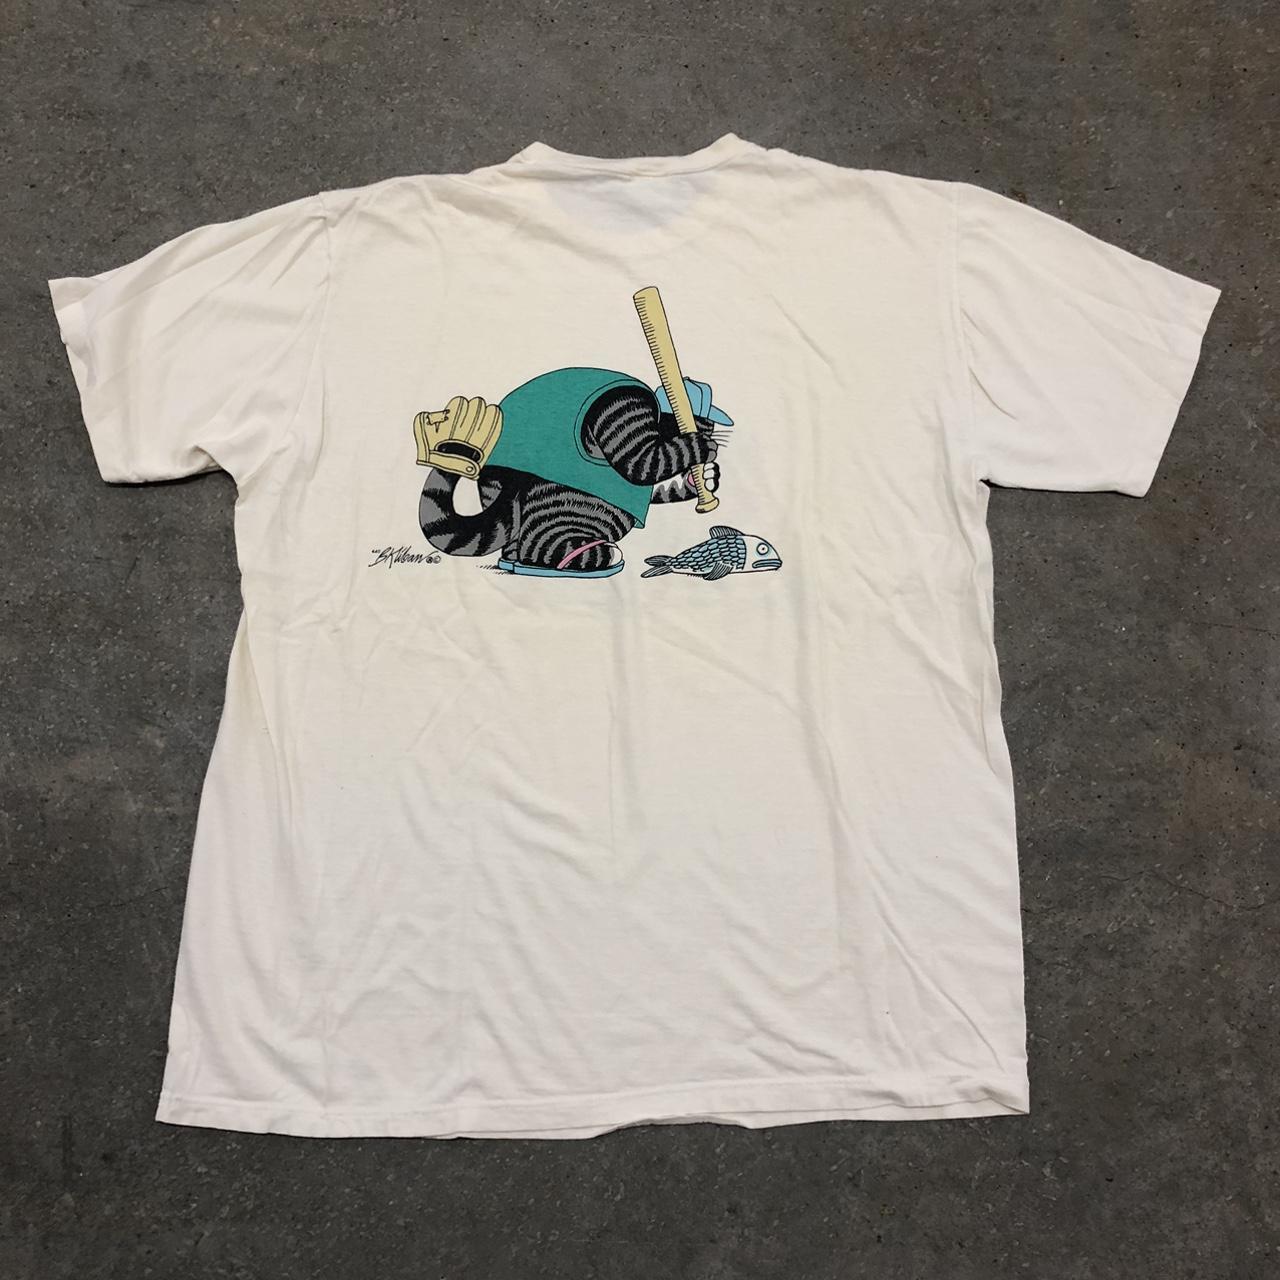 Vintage 90s Crazy Shirts Hawaii Baseball Cat Tee...